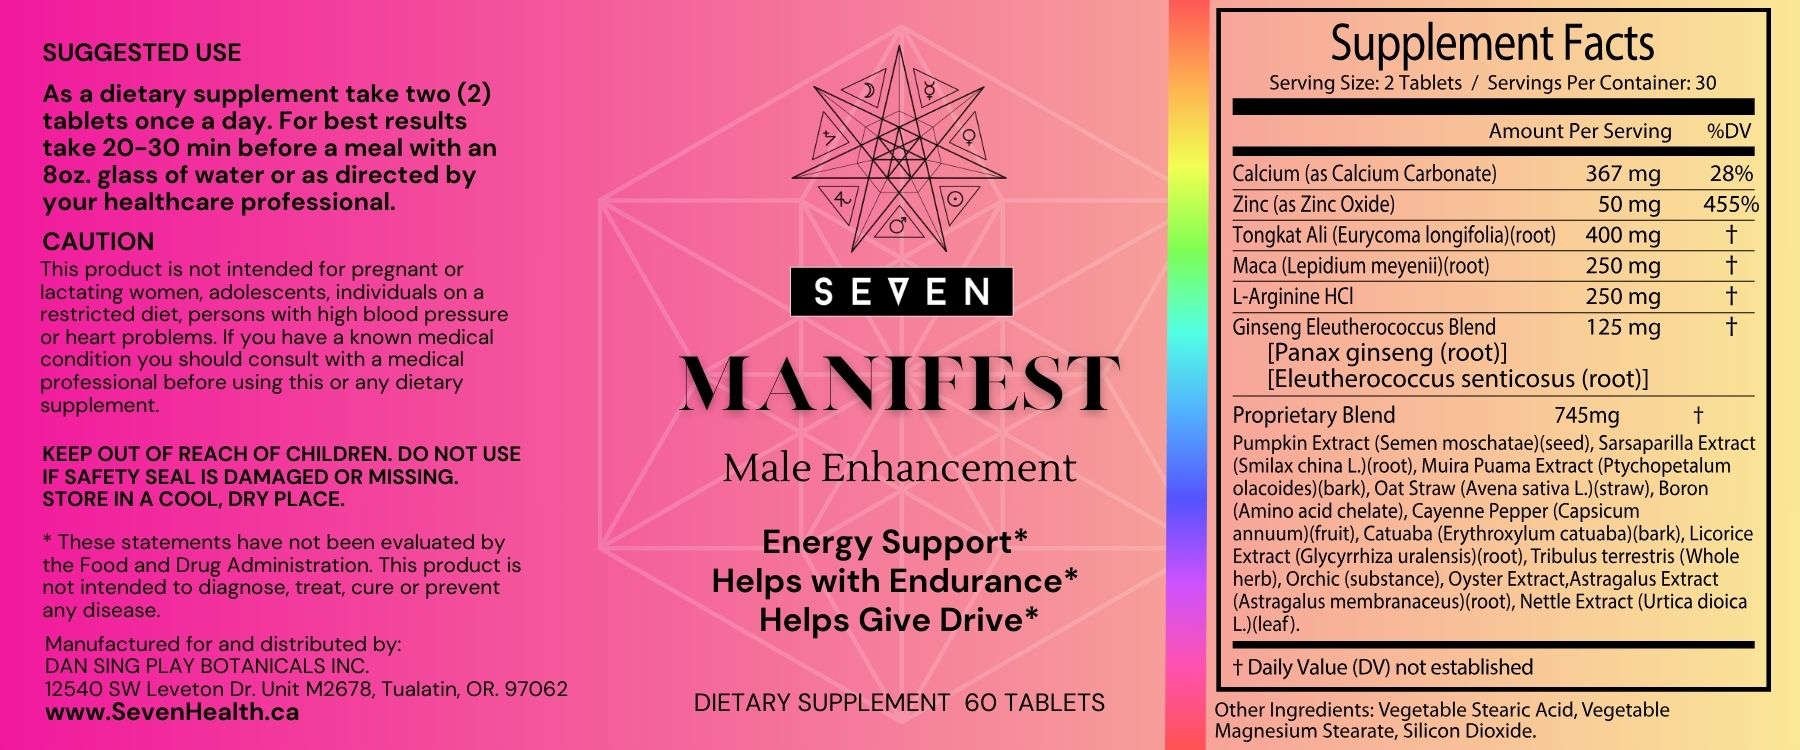 Manifest: Male Enhancement